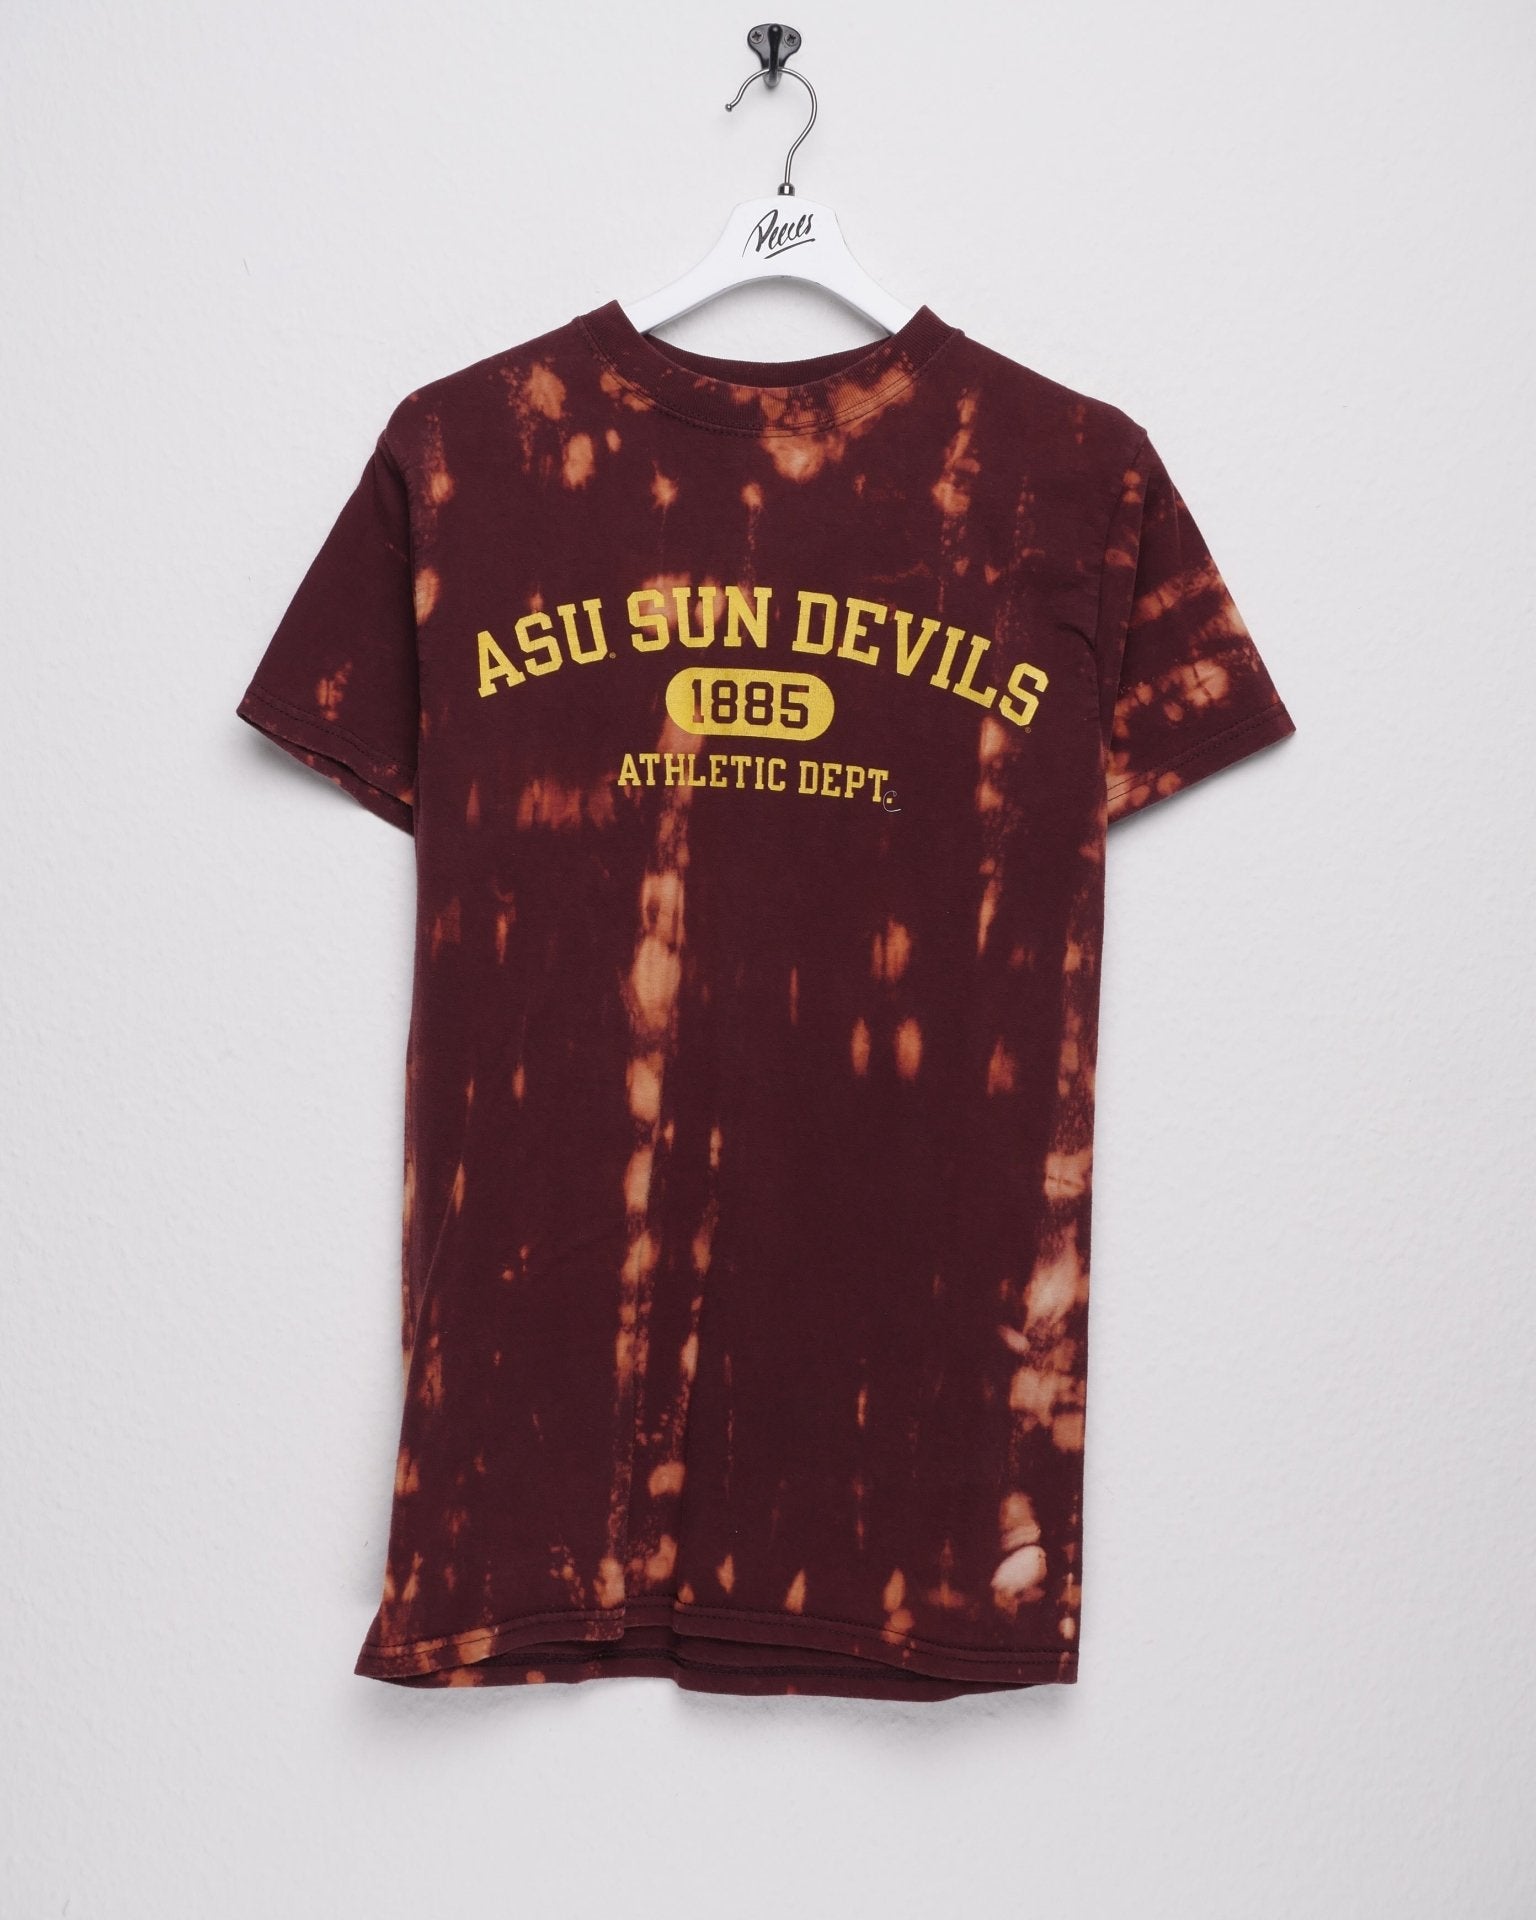 champion printed ASU Sun Devils Logo red Tie Dye Shirt - Peeces